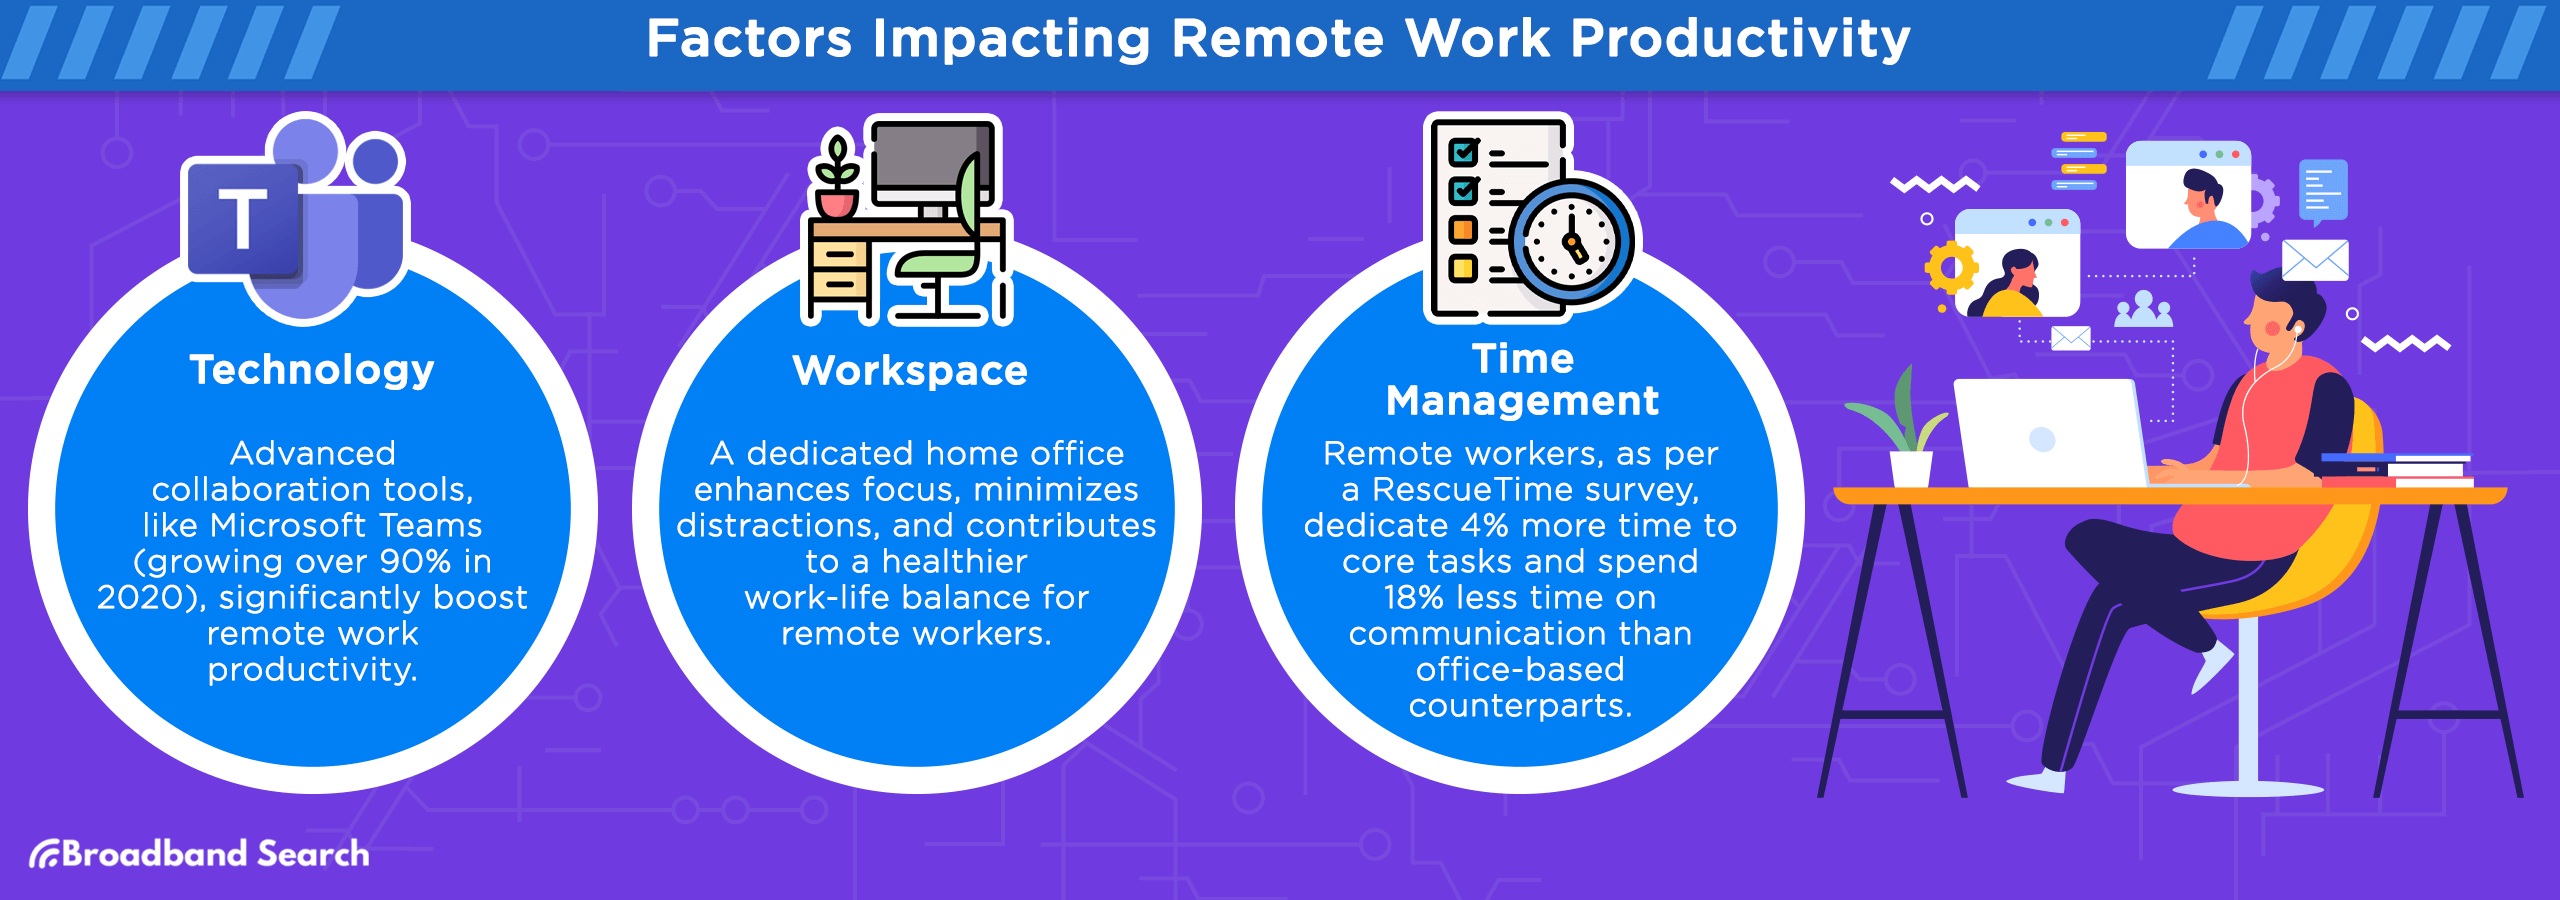 Three factors impacting remote work productivity